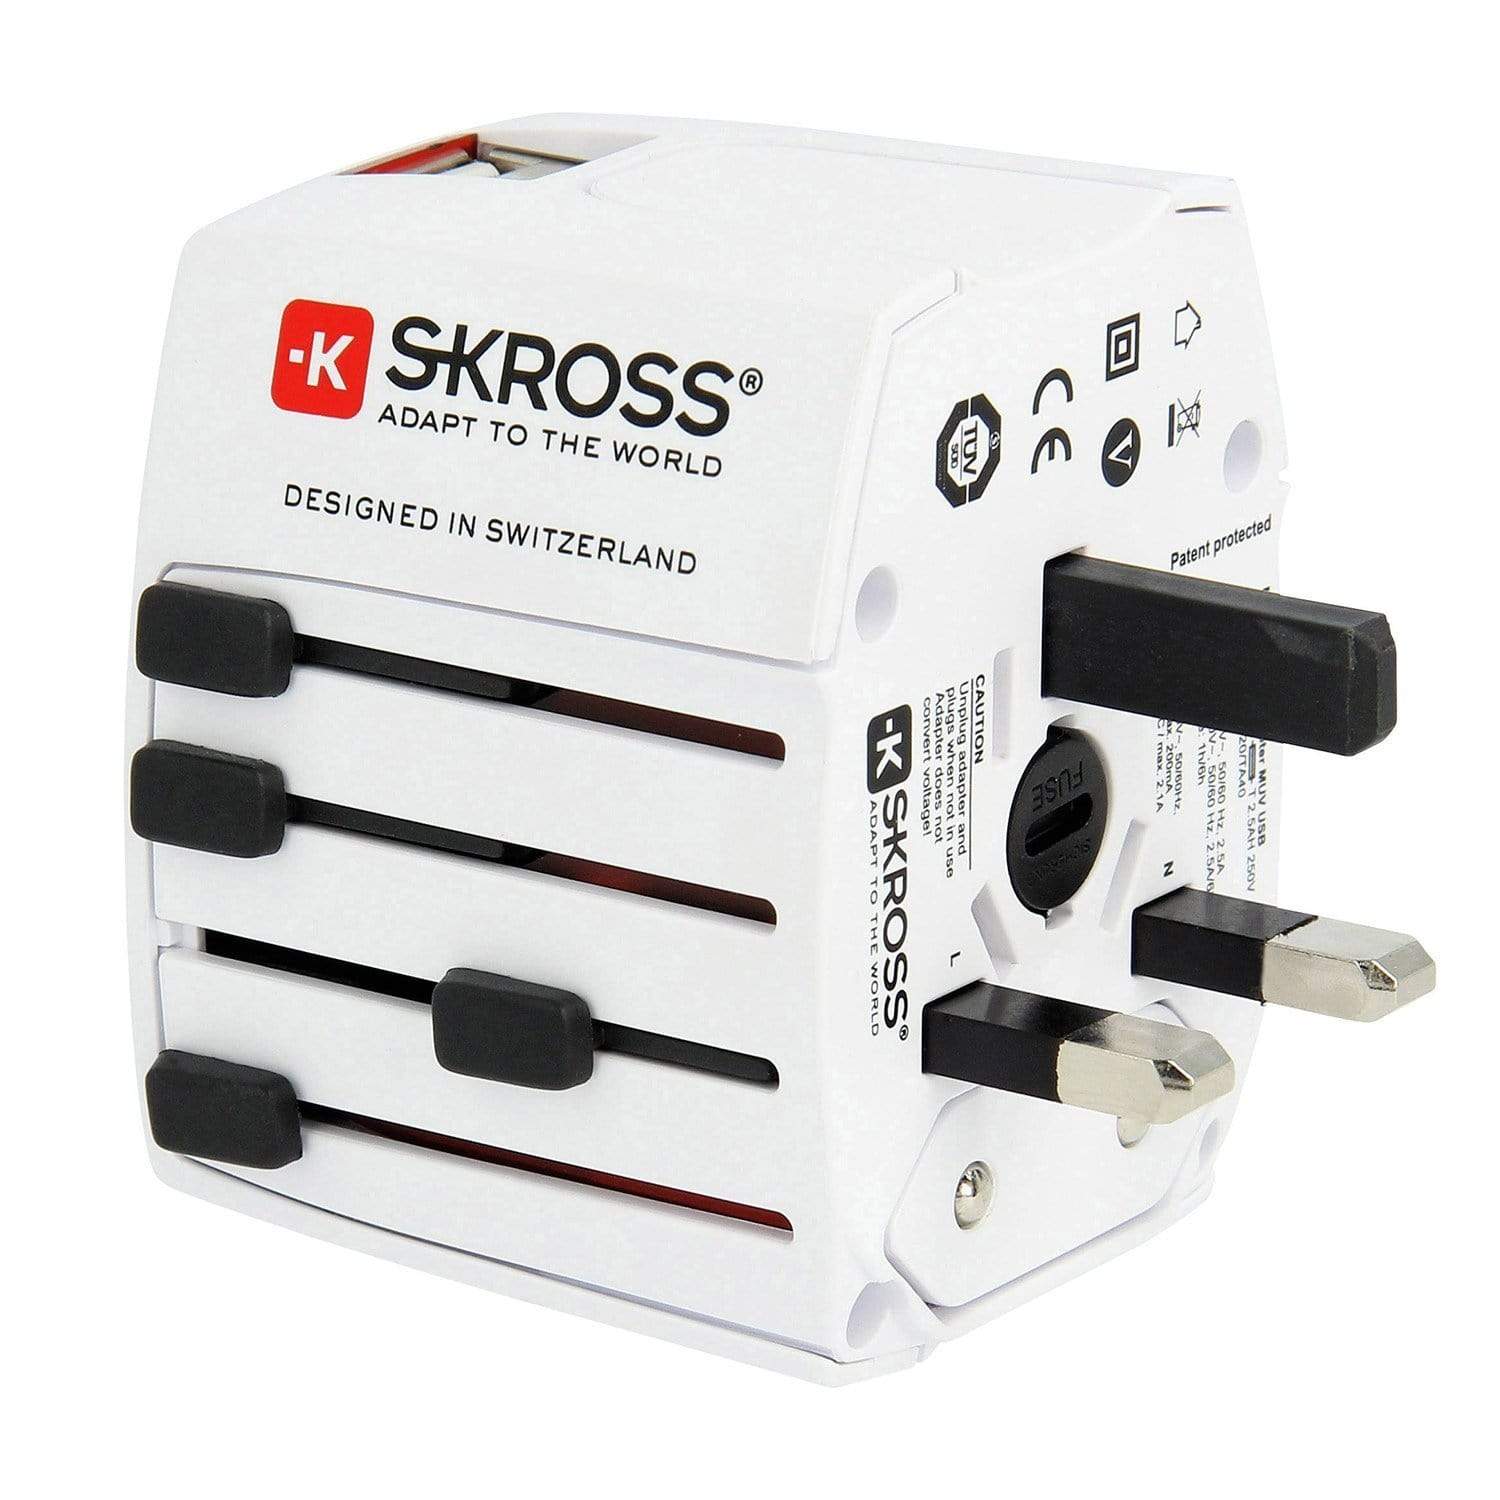 سكروس MUV USB 2.4 محول متعدد التوصيل - أبيض - 1302930 - Jashanmal Home